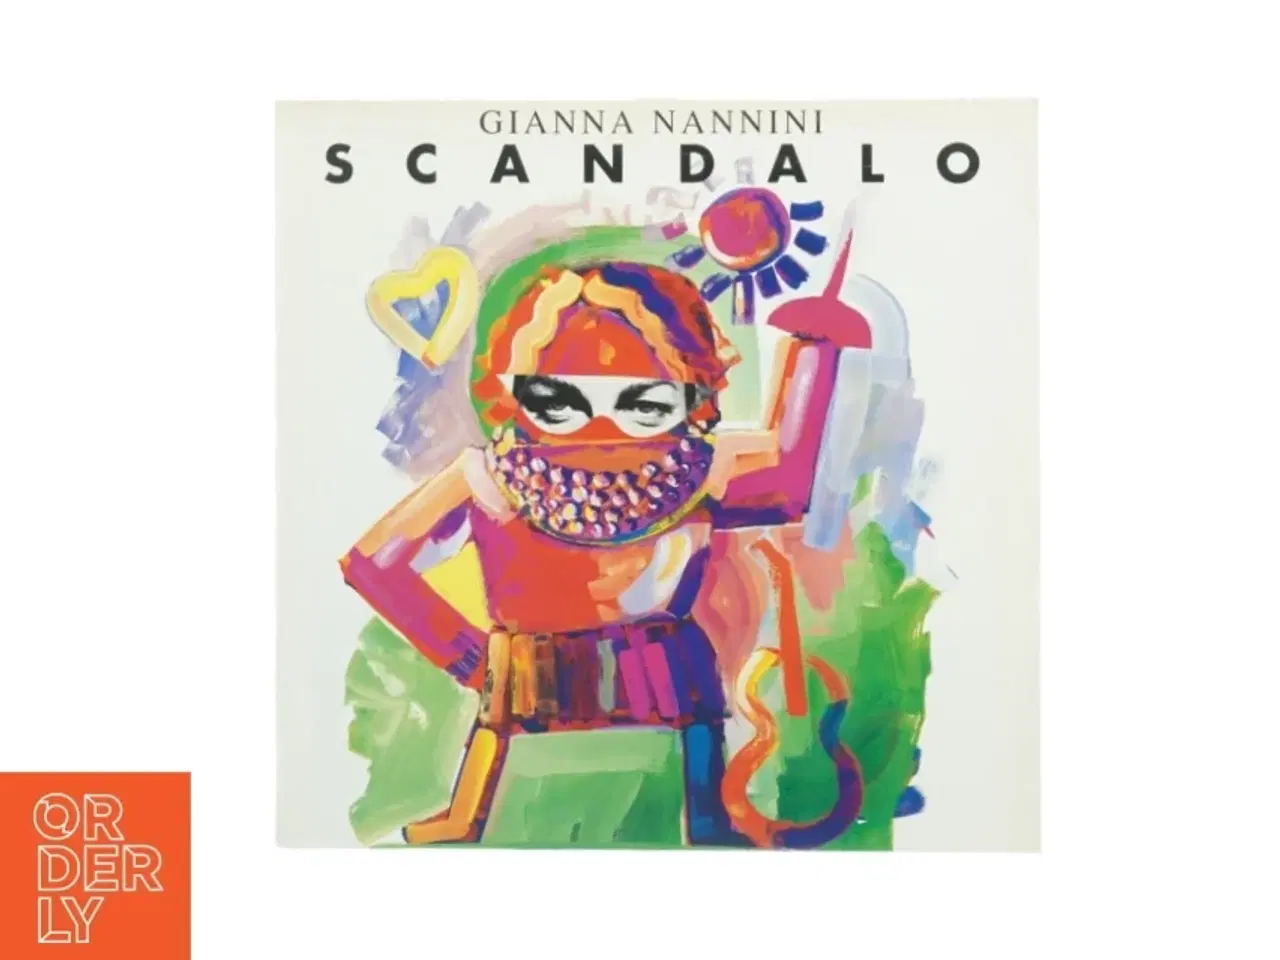 Billede 1 - Gianna Nannini - Scandalo Vinylplade (str. 31 x 31 cm)